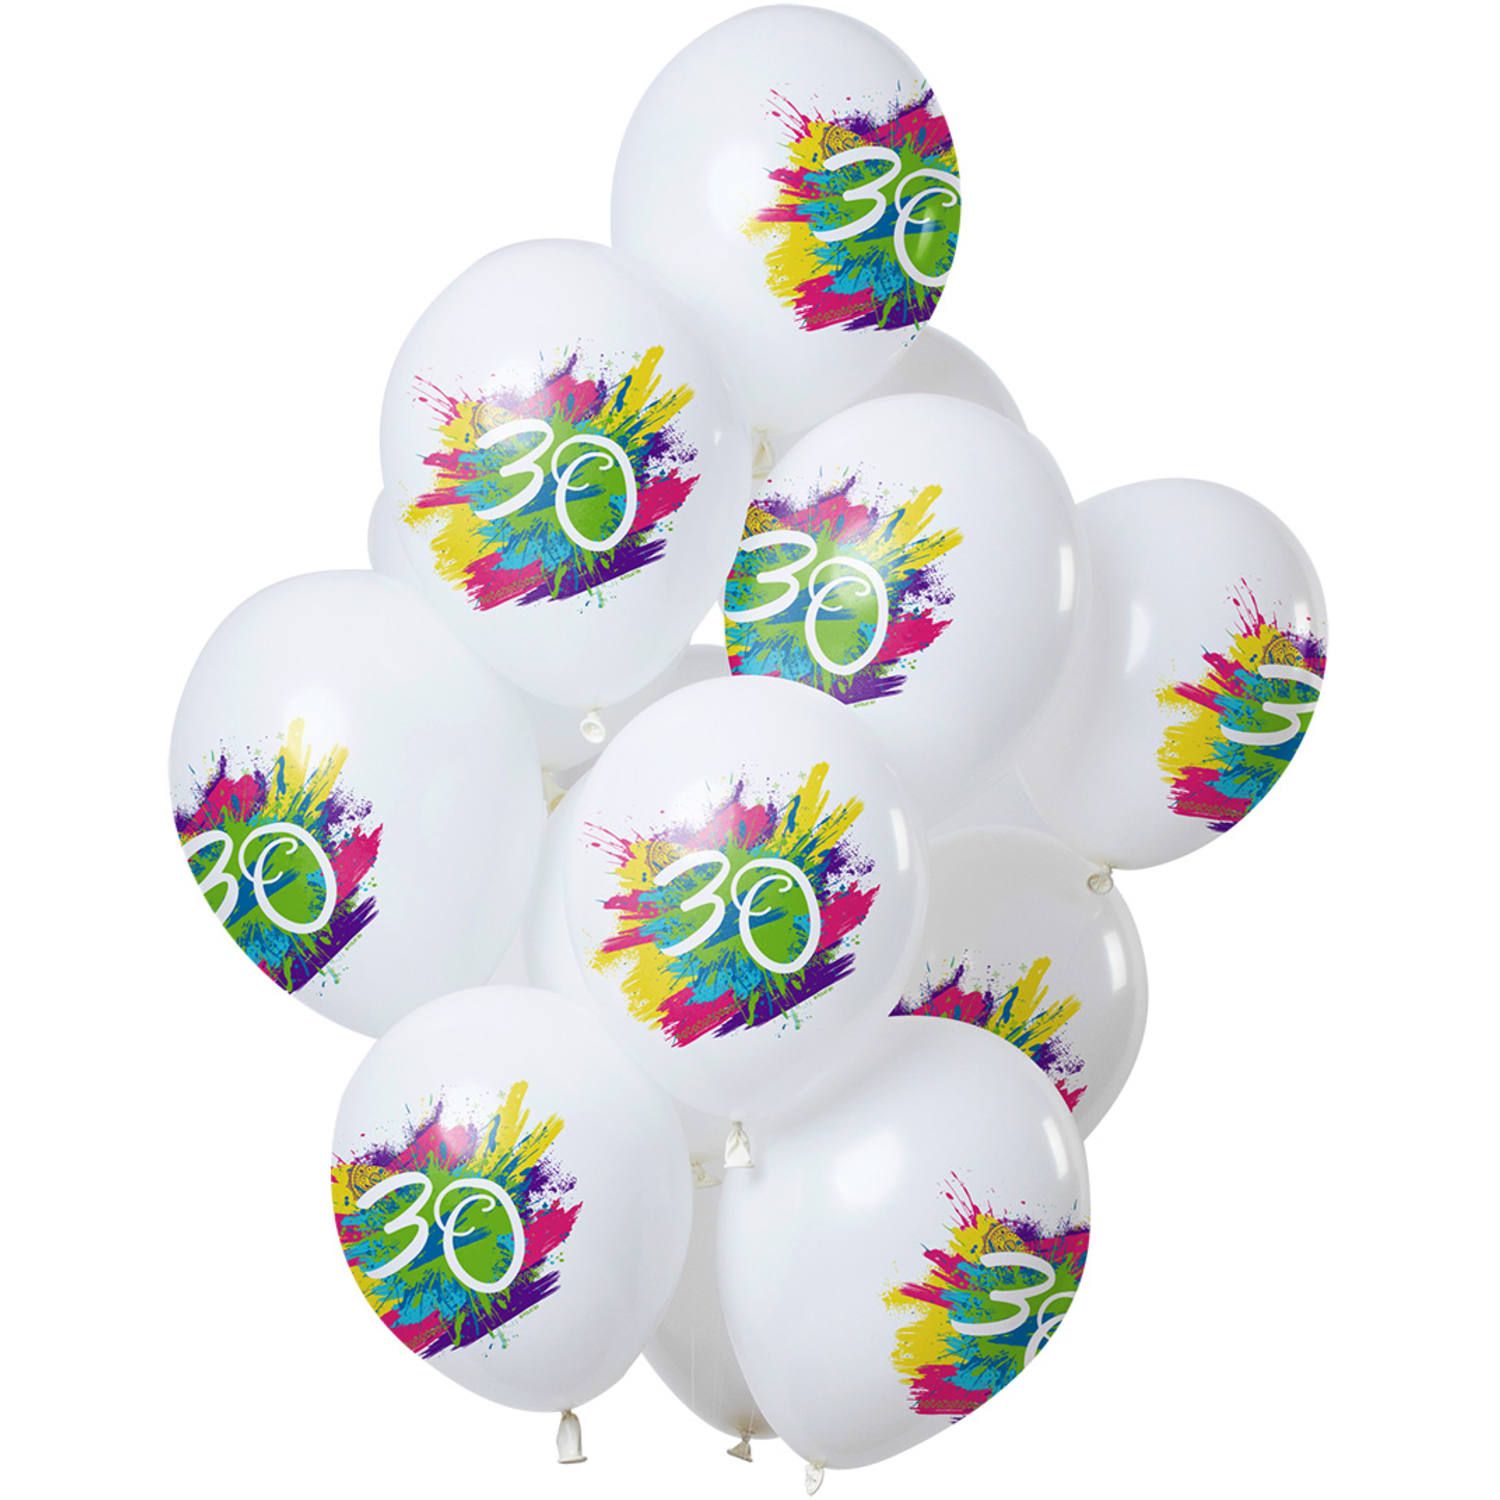 Color splash 30 jaar ballonnen 12 stuks